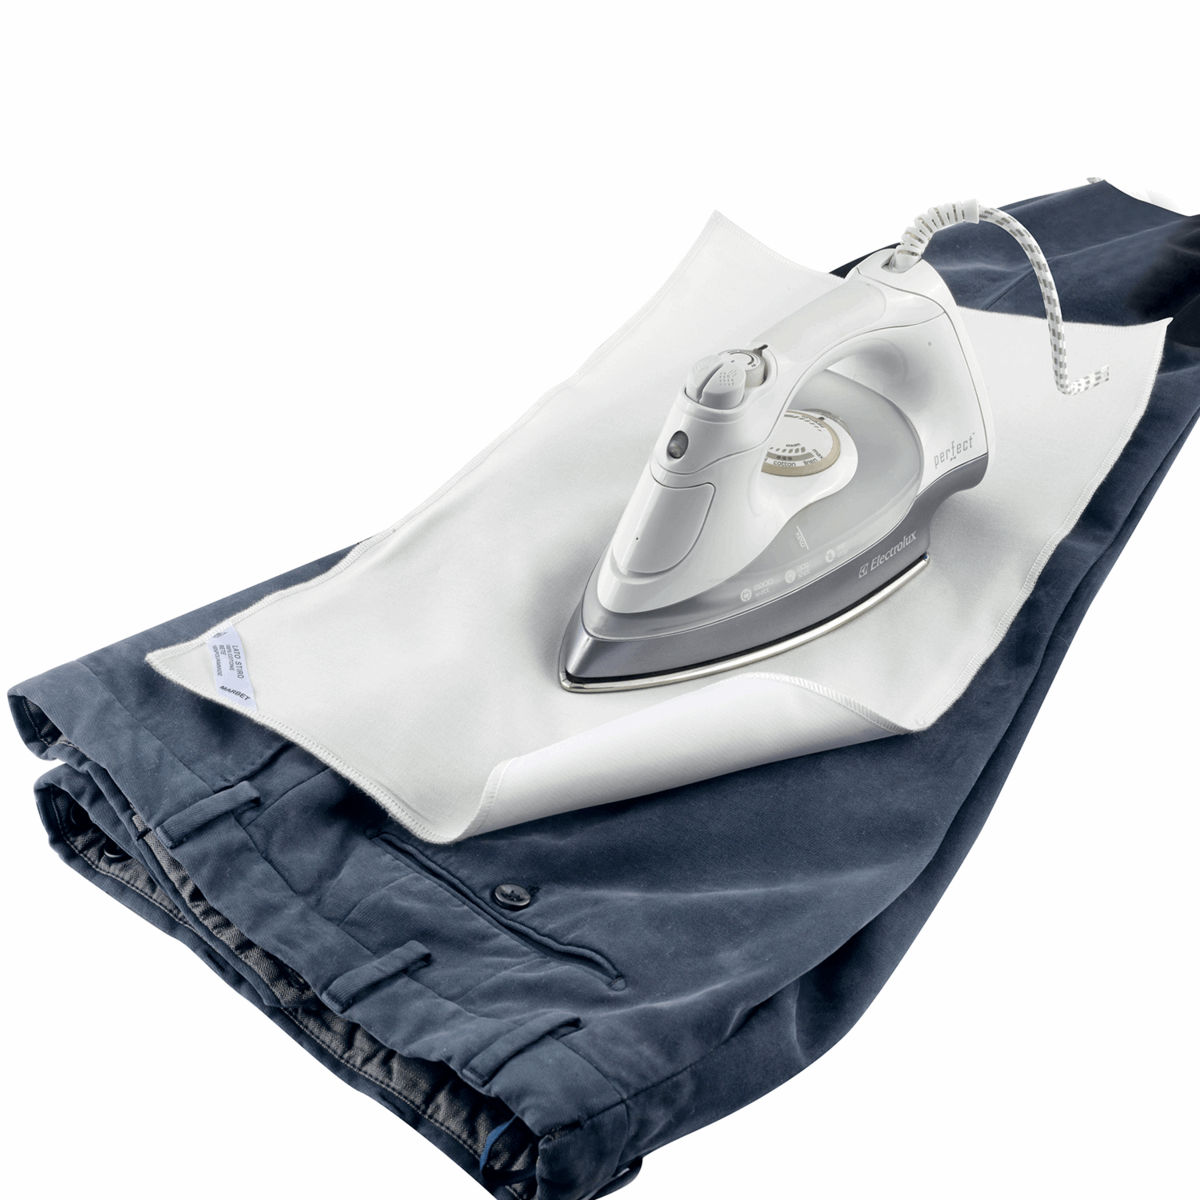 Marbet White Steam Ironing Cloth - 55 x 30cm